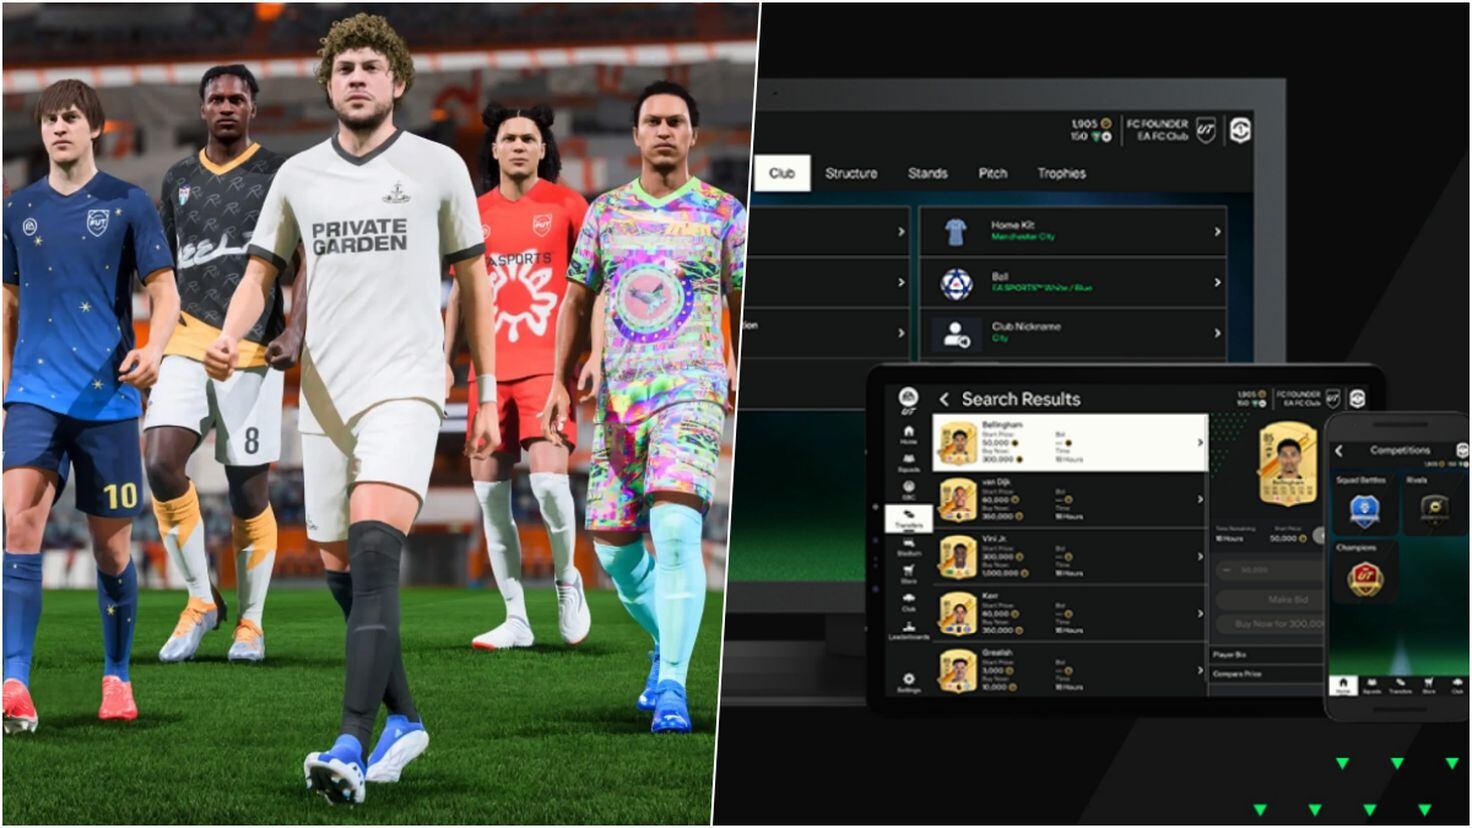 FIFA 20 Companion App Release Time Today: FUT Mobile web app news